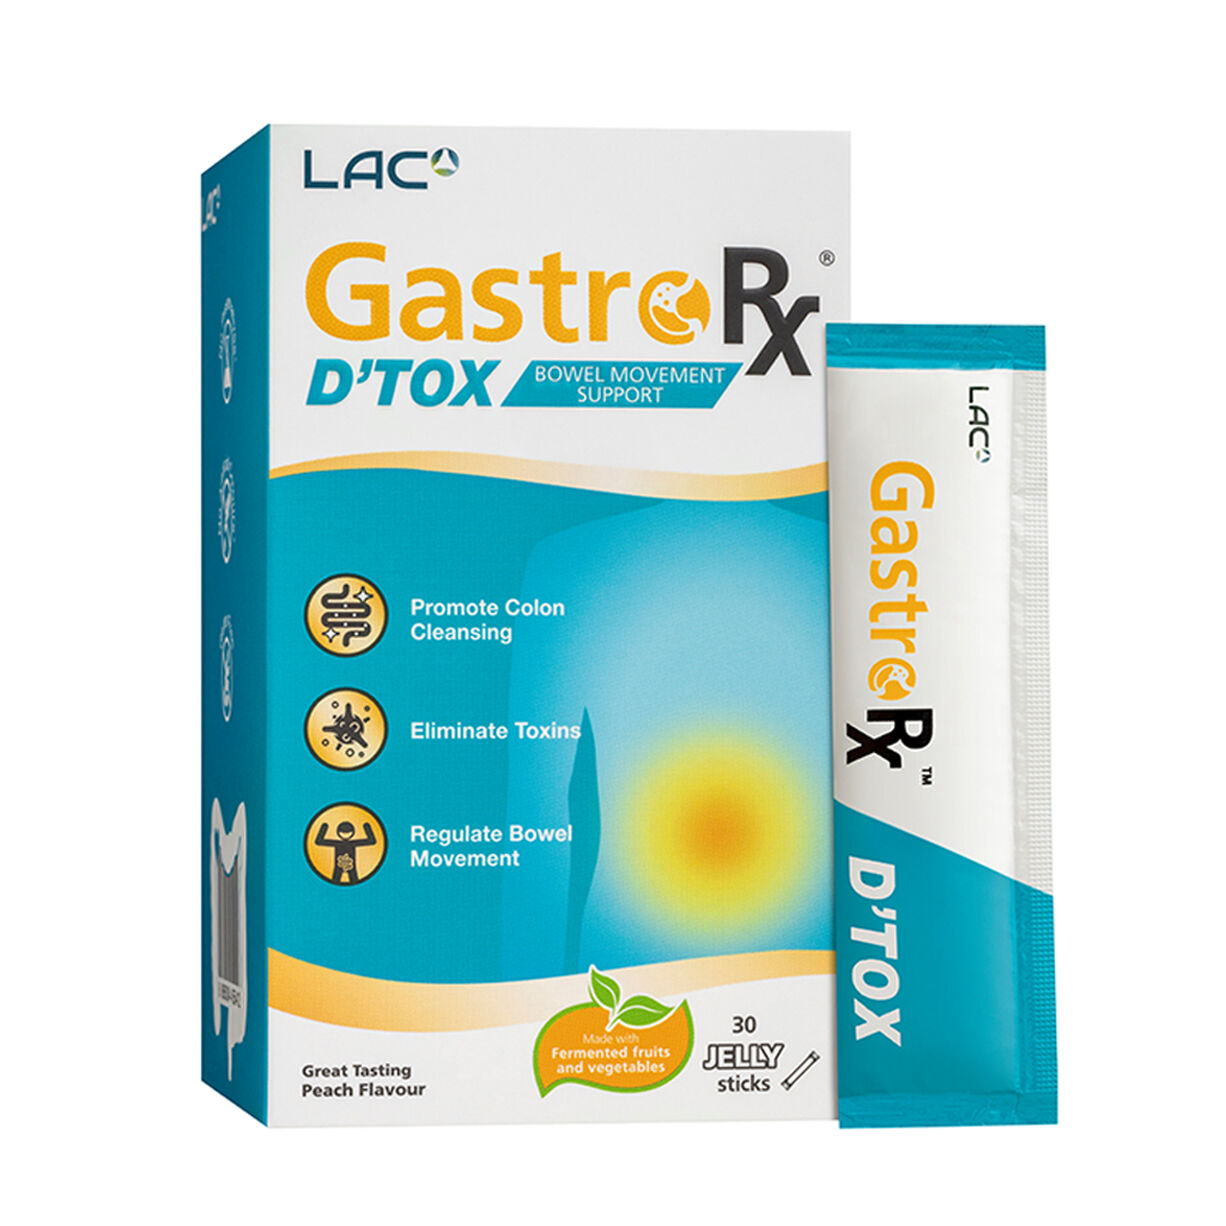 https://www.lac.com/dw/image/v2/BCXD_PRD/on/demandware.static/-/Sites-masterCatalog_SITES/default/dwa722180c/product-images/gastrorx-series/gastrorx-dtox-bowel-movement-support/gastrorx-dtox-bowel-movement-support-30/01403490_lac_gastrorx-dtox_30-sticks_box_front-left-with-stick-on-right_1635x1227_web.jpg?sw=1635&sh=1226&sm=fit